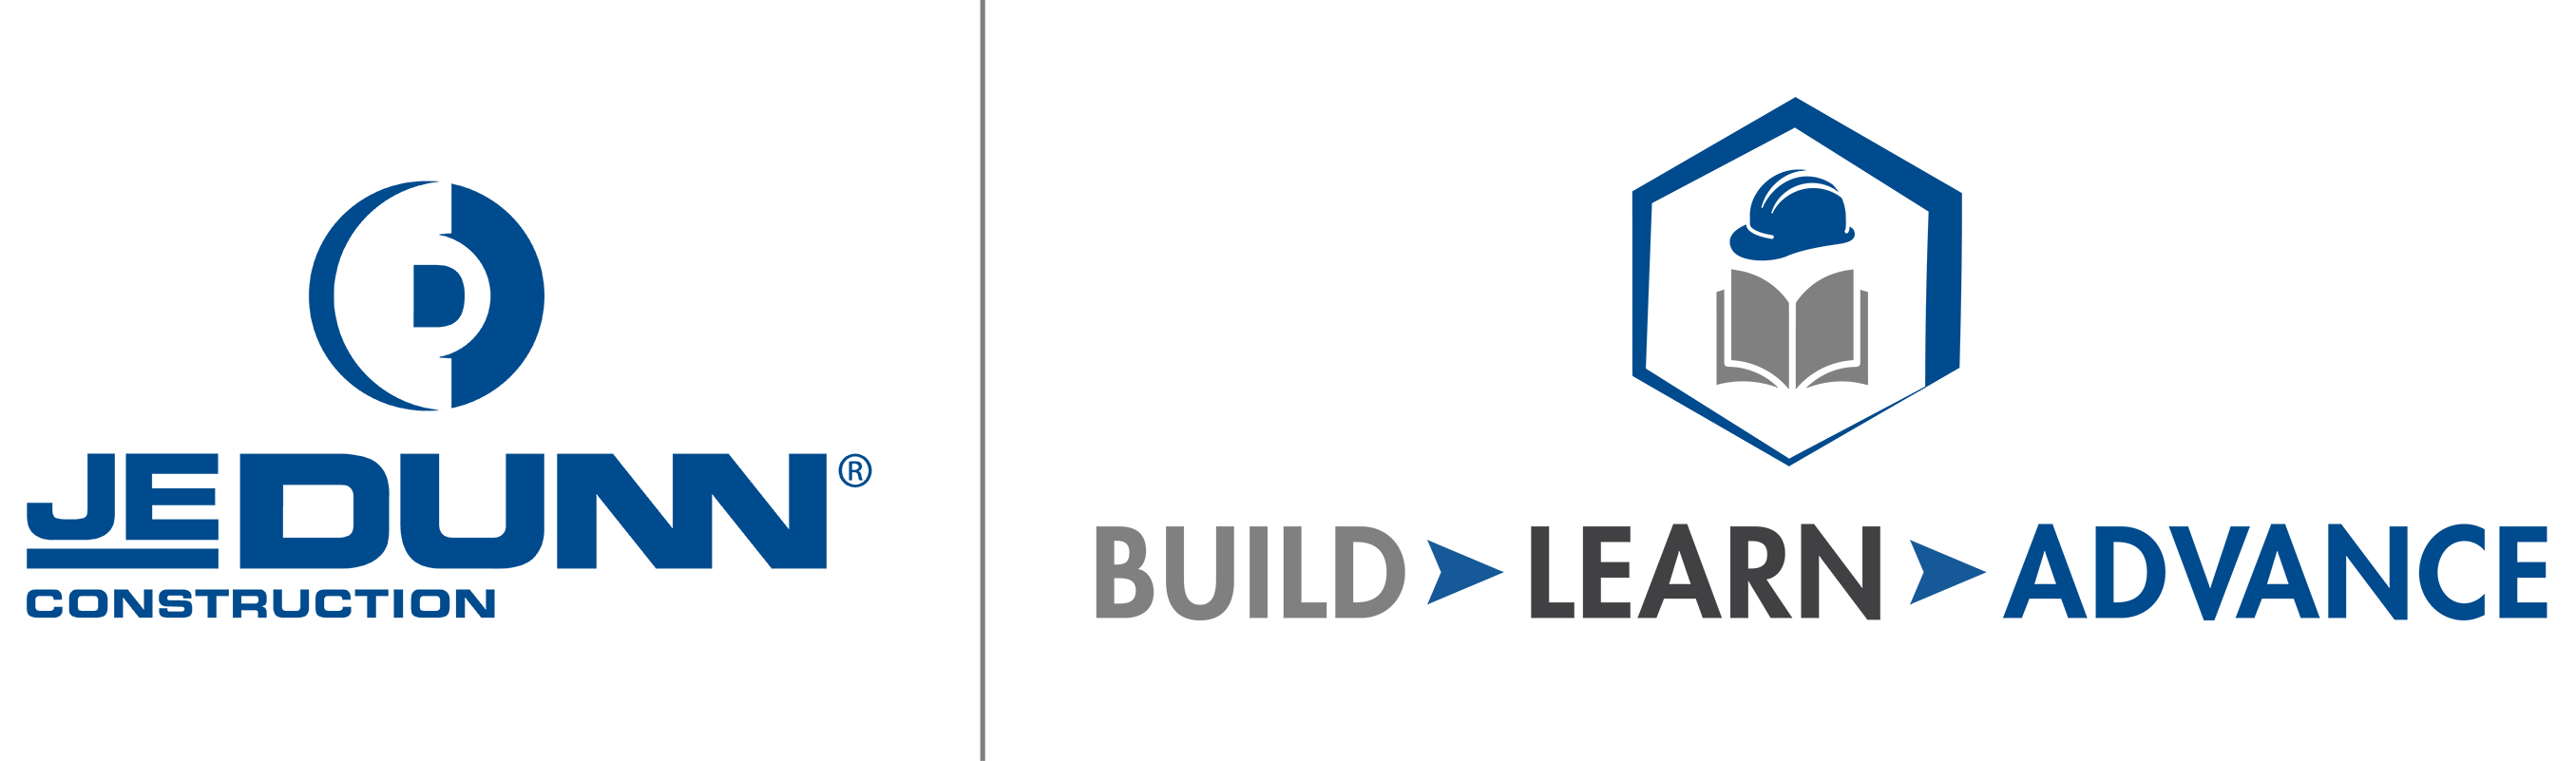 build learn advance logo